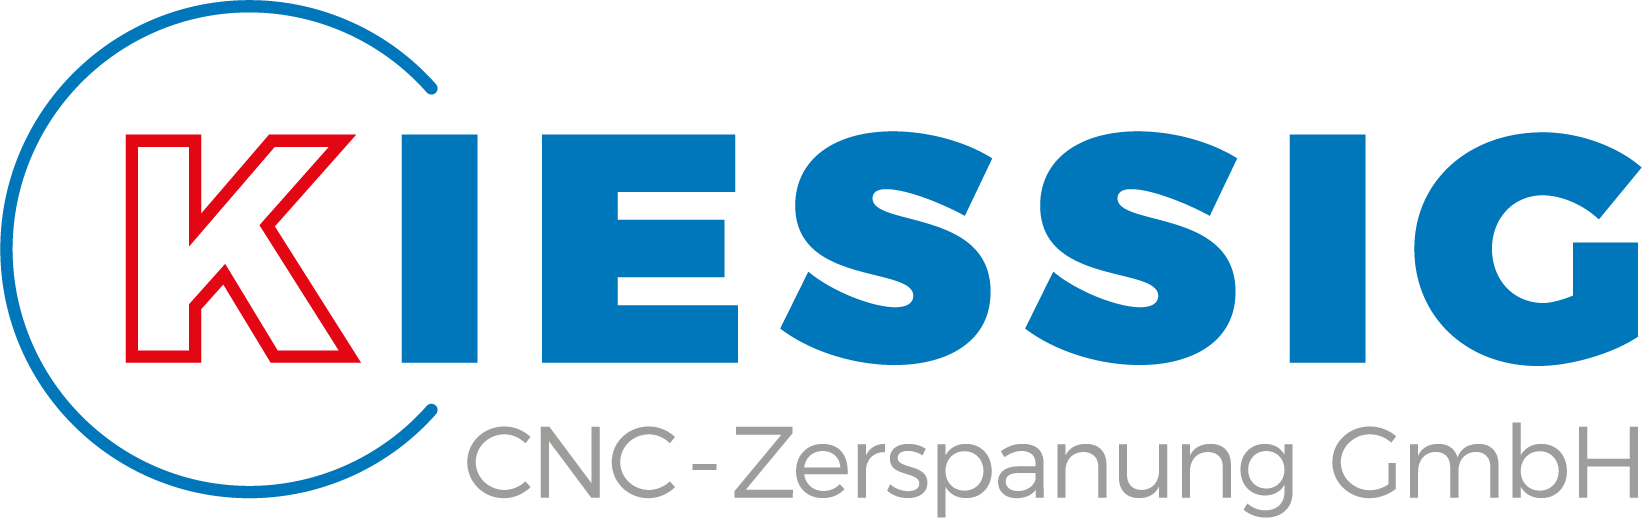 KIESSIG CNC-Zerspanung GmbH